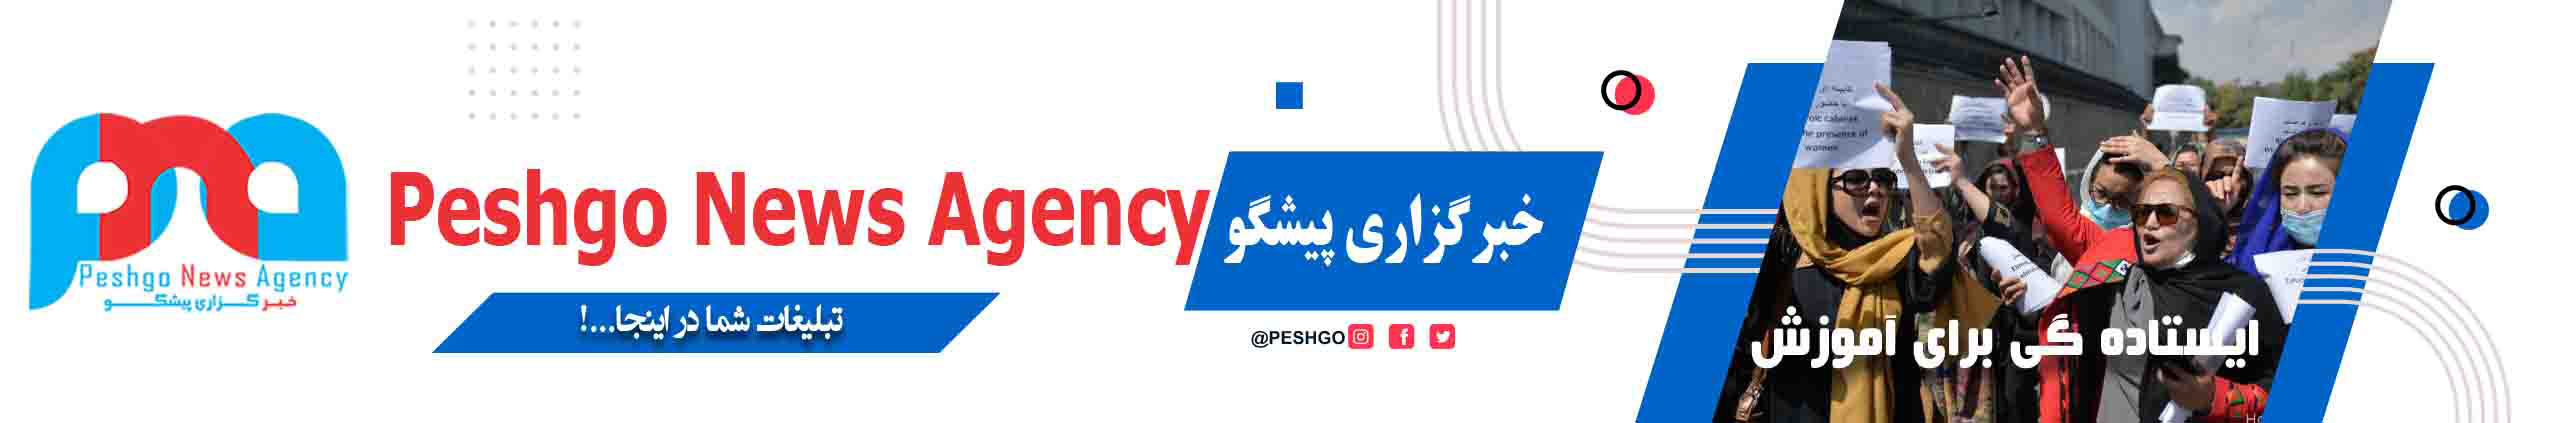 Peshgo News Agency – خبرگزاری پیشگو